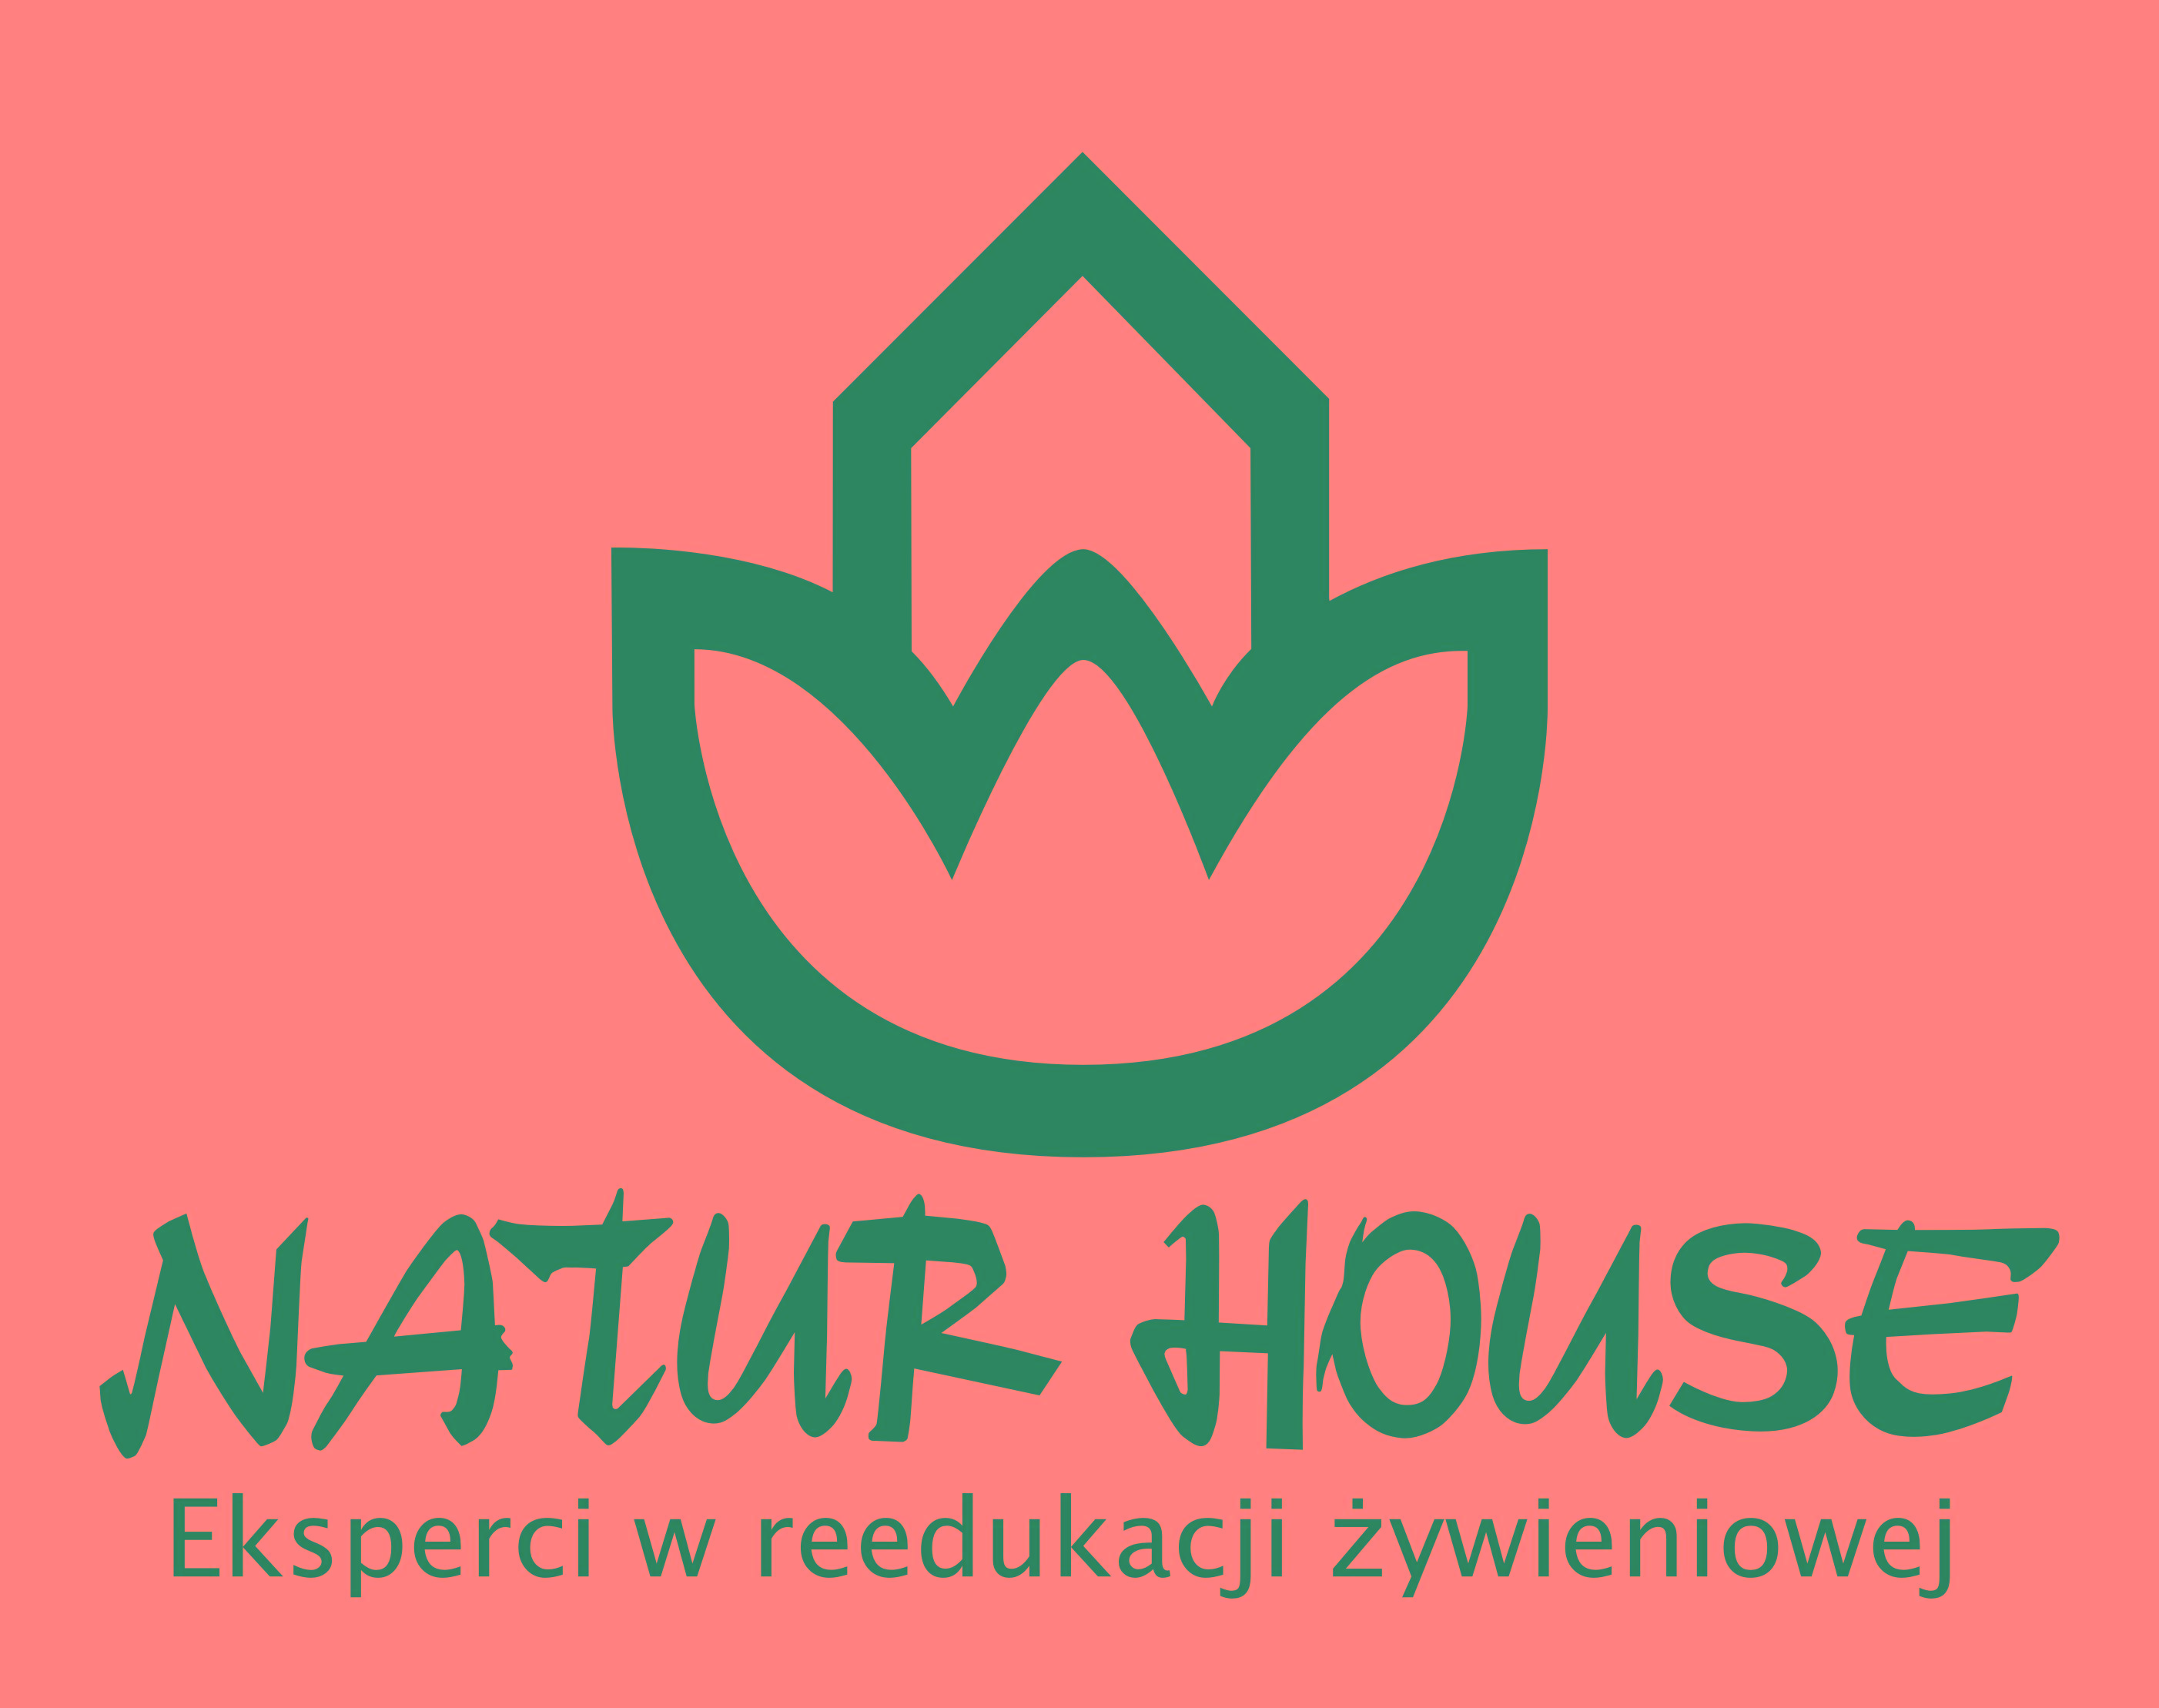 Dietetyk - Centrum Dietetyczne Naturhouse, Toruń, kujawsko-pomorskie